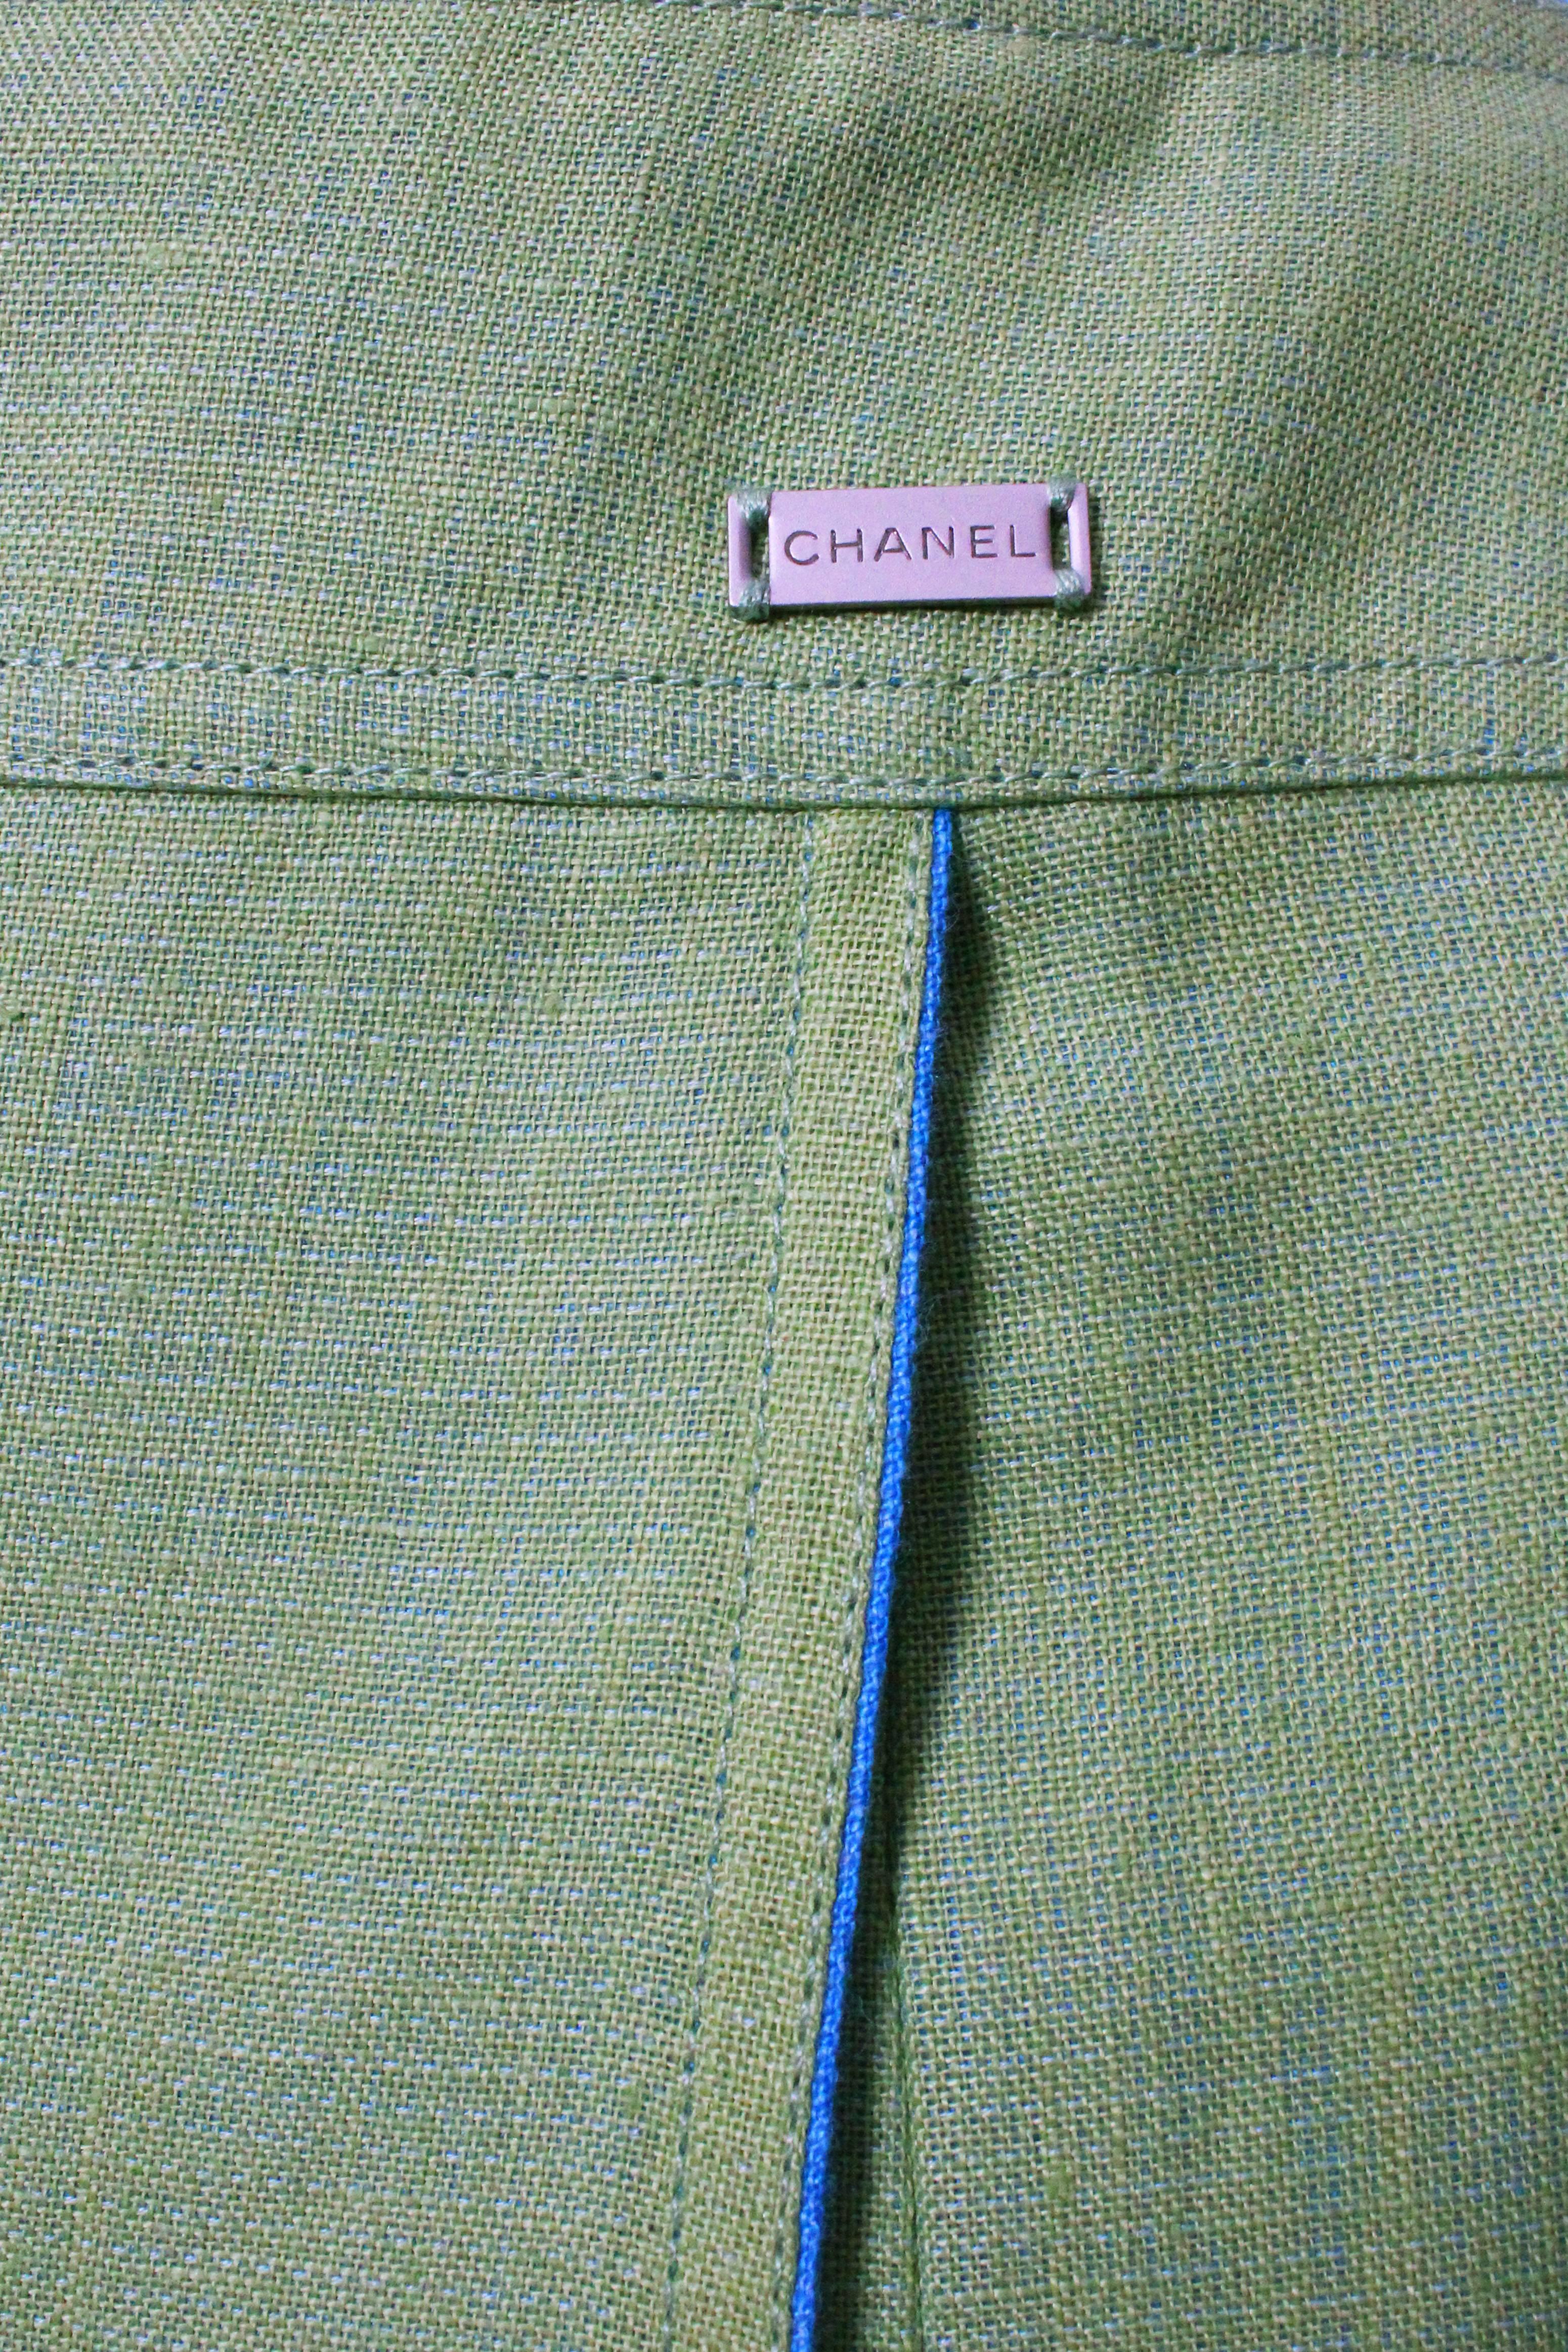 Chanel Summer Skirt Suit 3